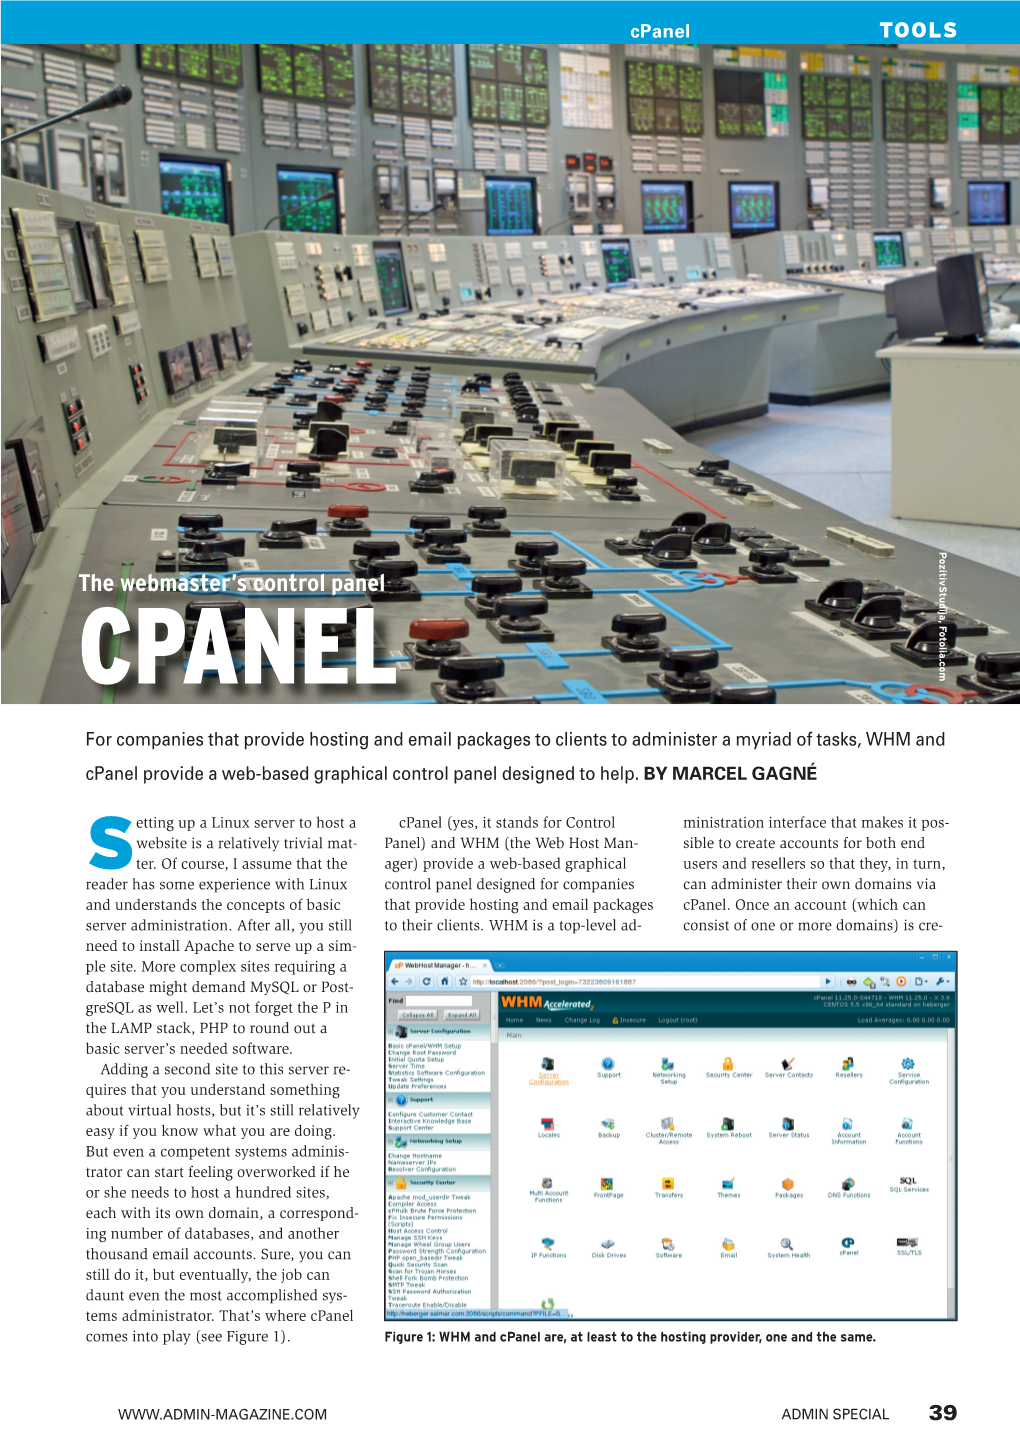 Cpanel Tools Pozitivstudija, Fotolia.Com the Webmaster’S Control Panel CPANEL